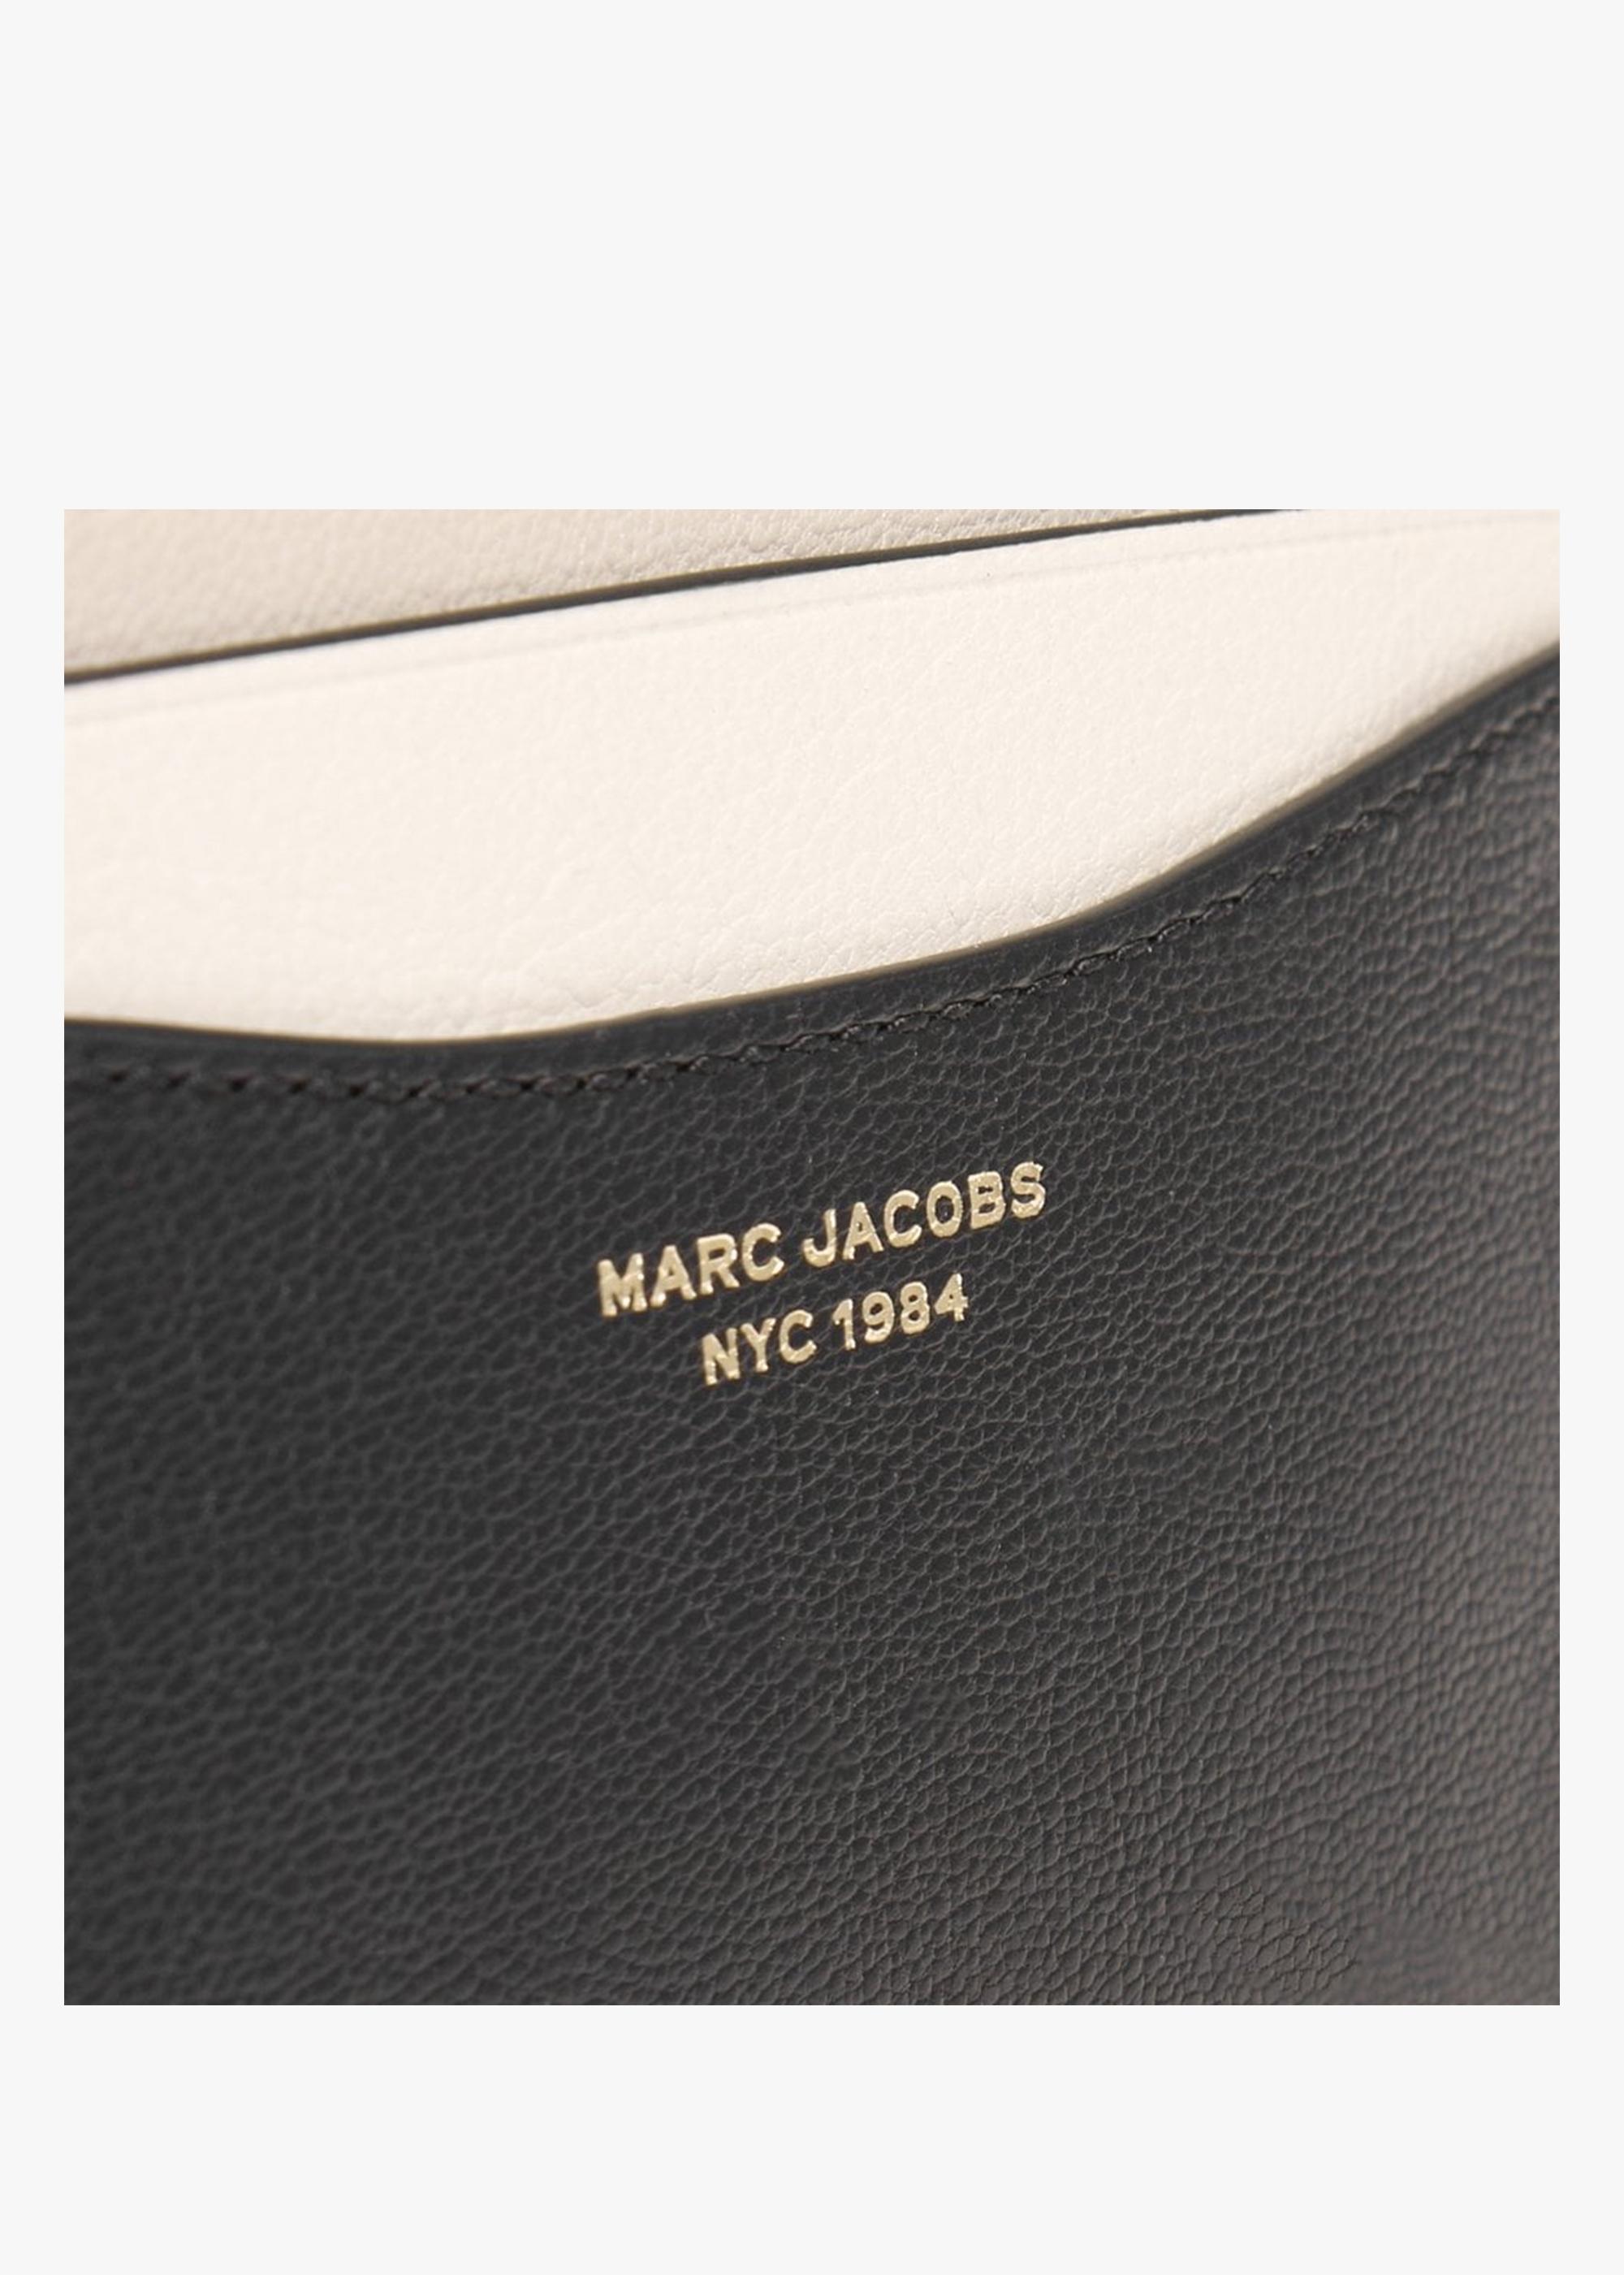 Marc Jacobs The Slim 84 Colourblock Top Zip Black Multi Leather